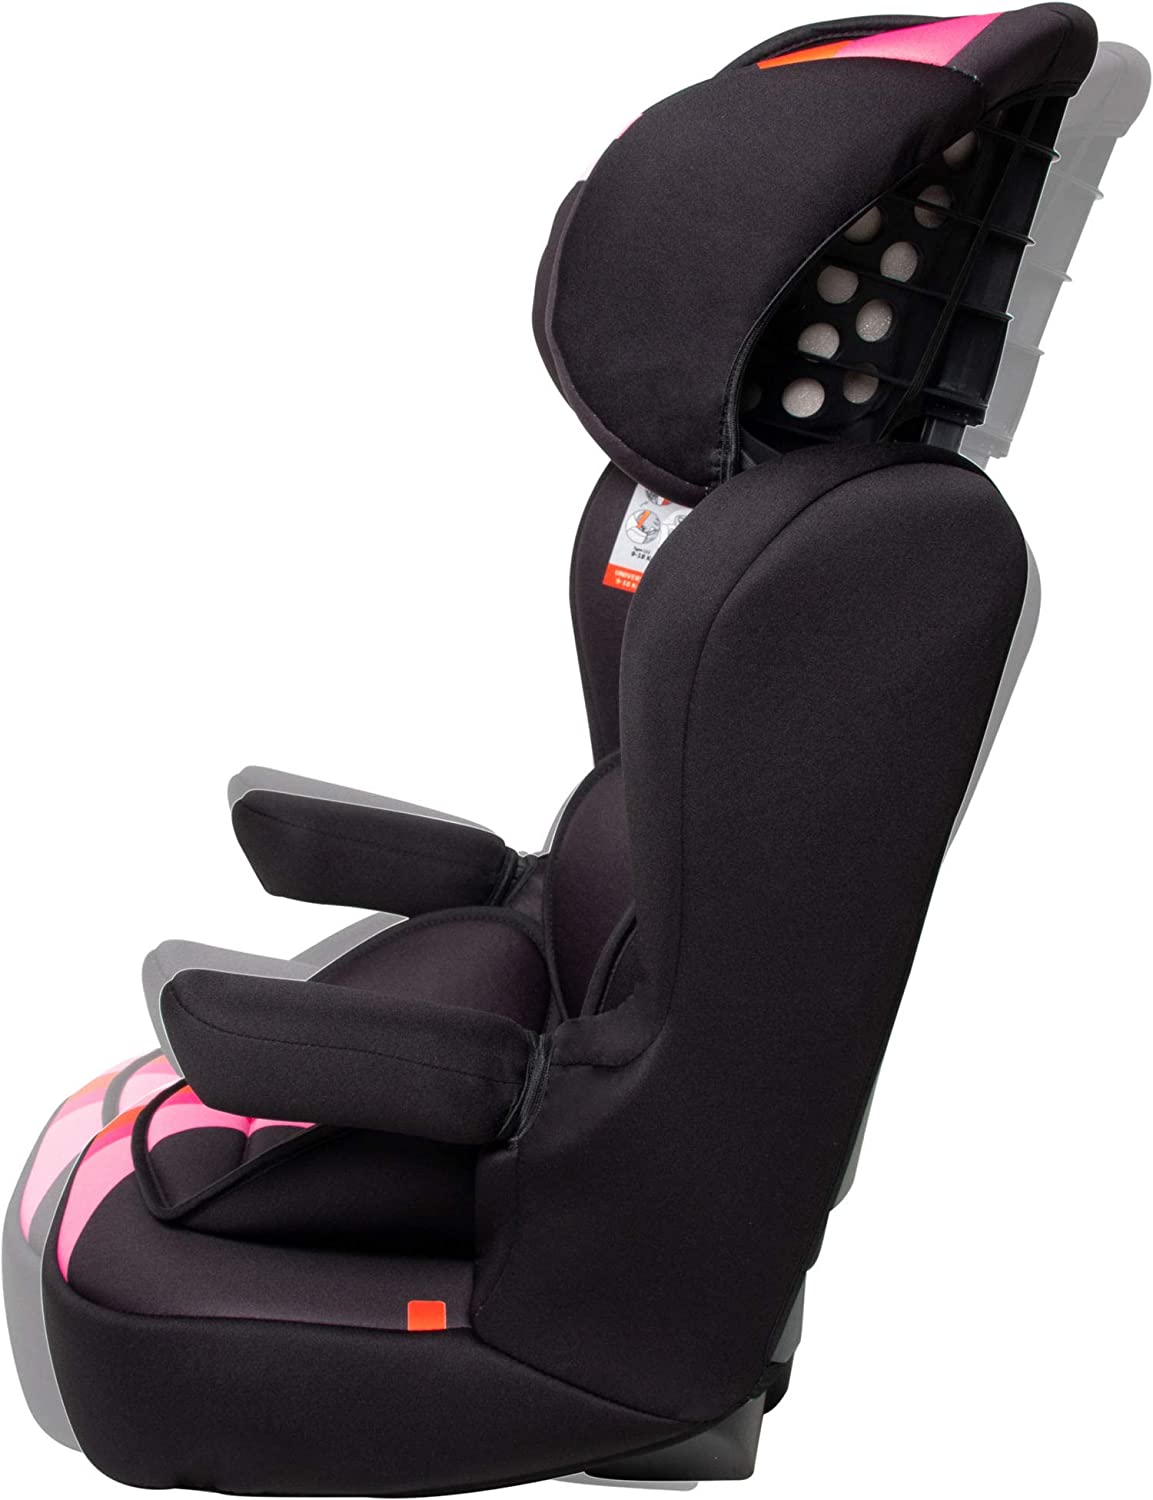 Osann I-MAX SP Child Car Seat Group 1/2/3 (9-36 kg)